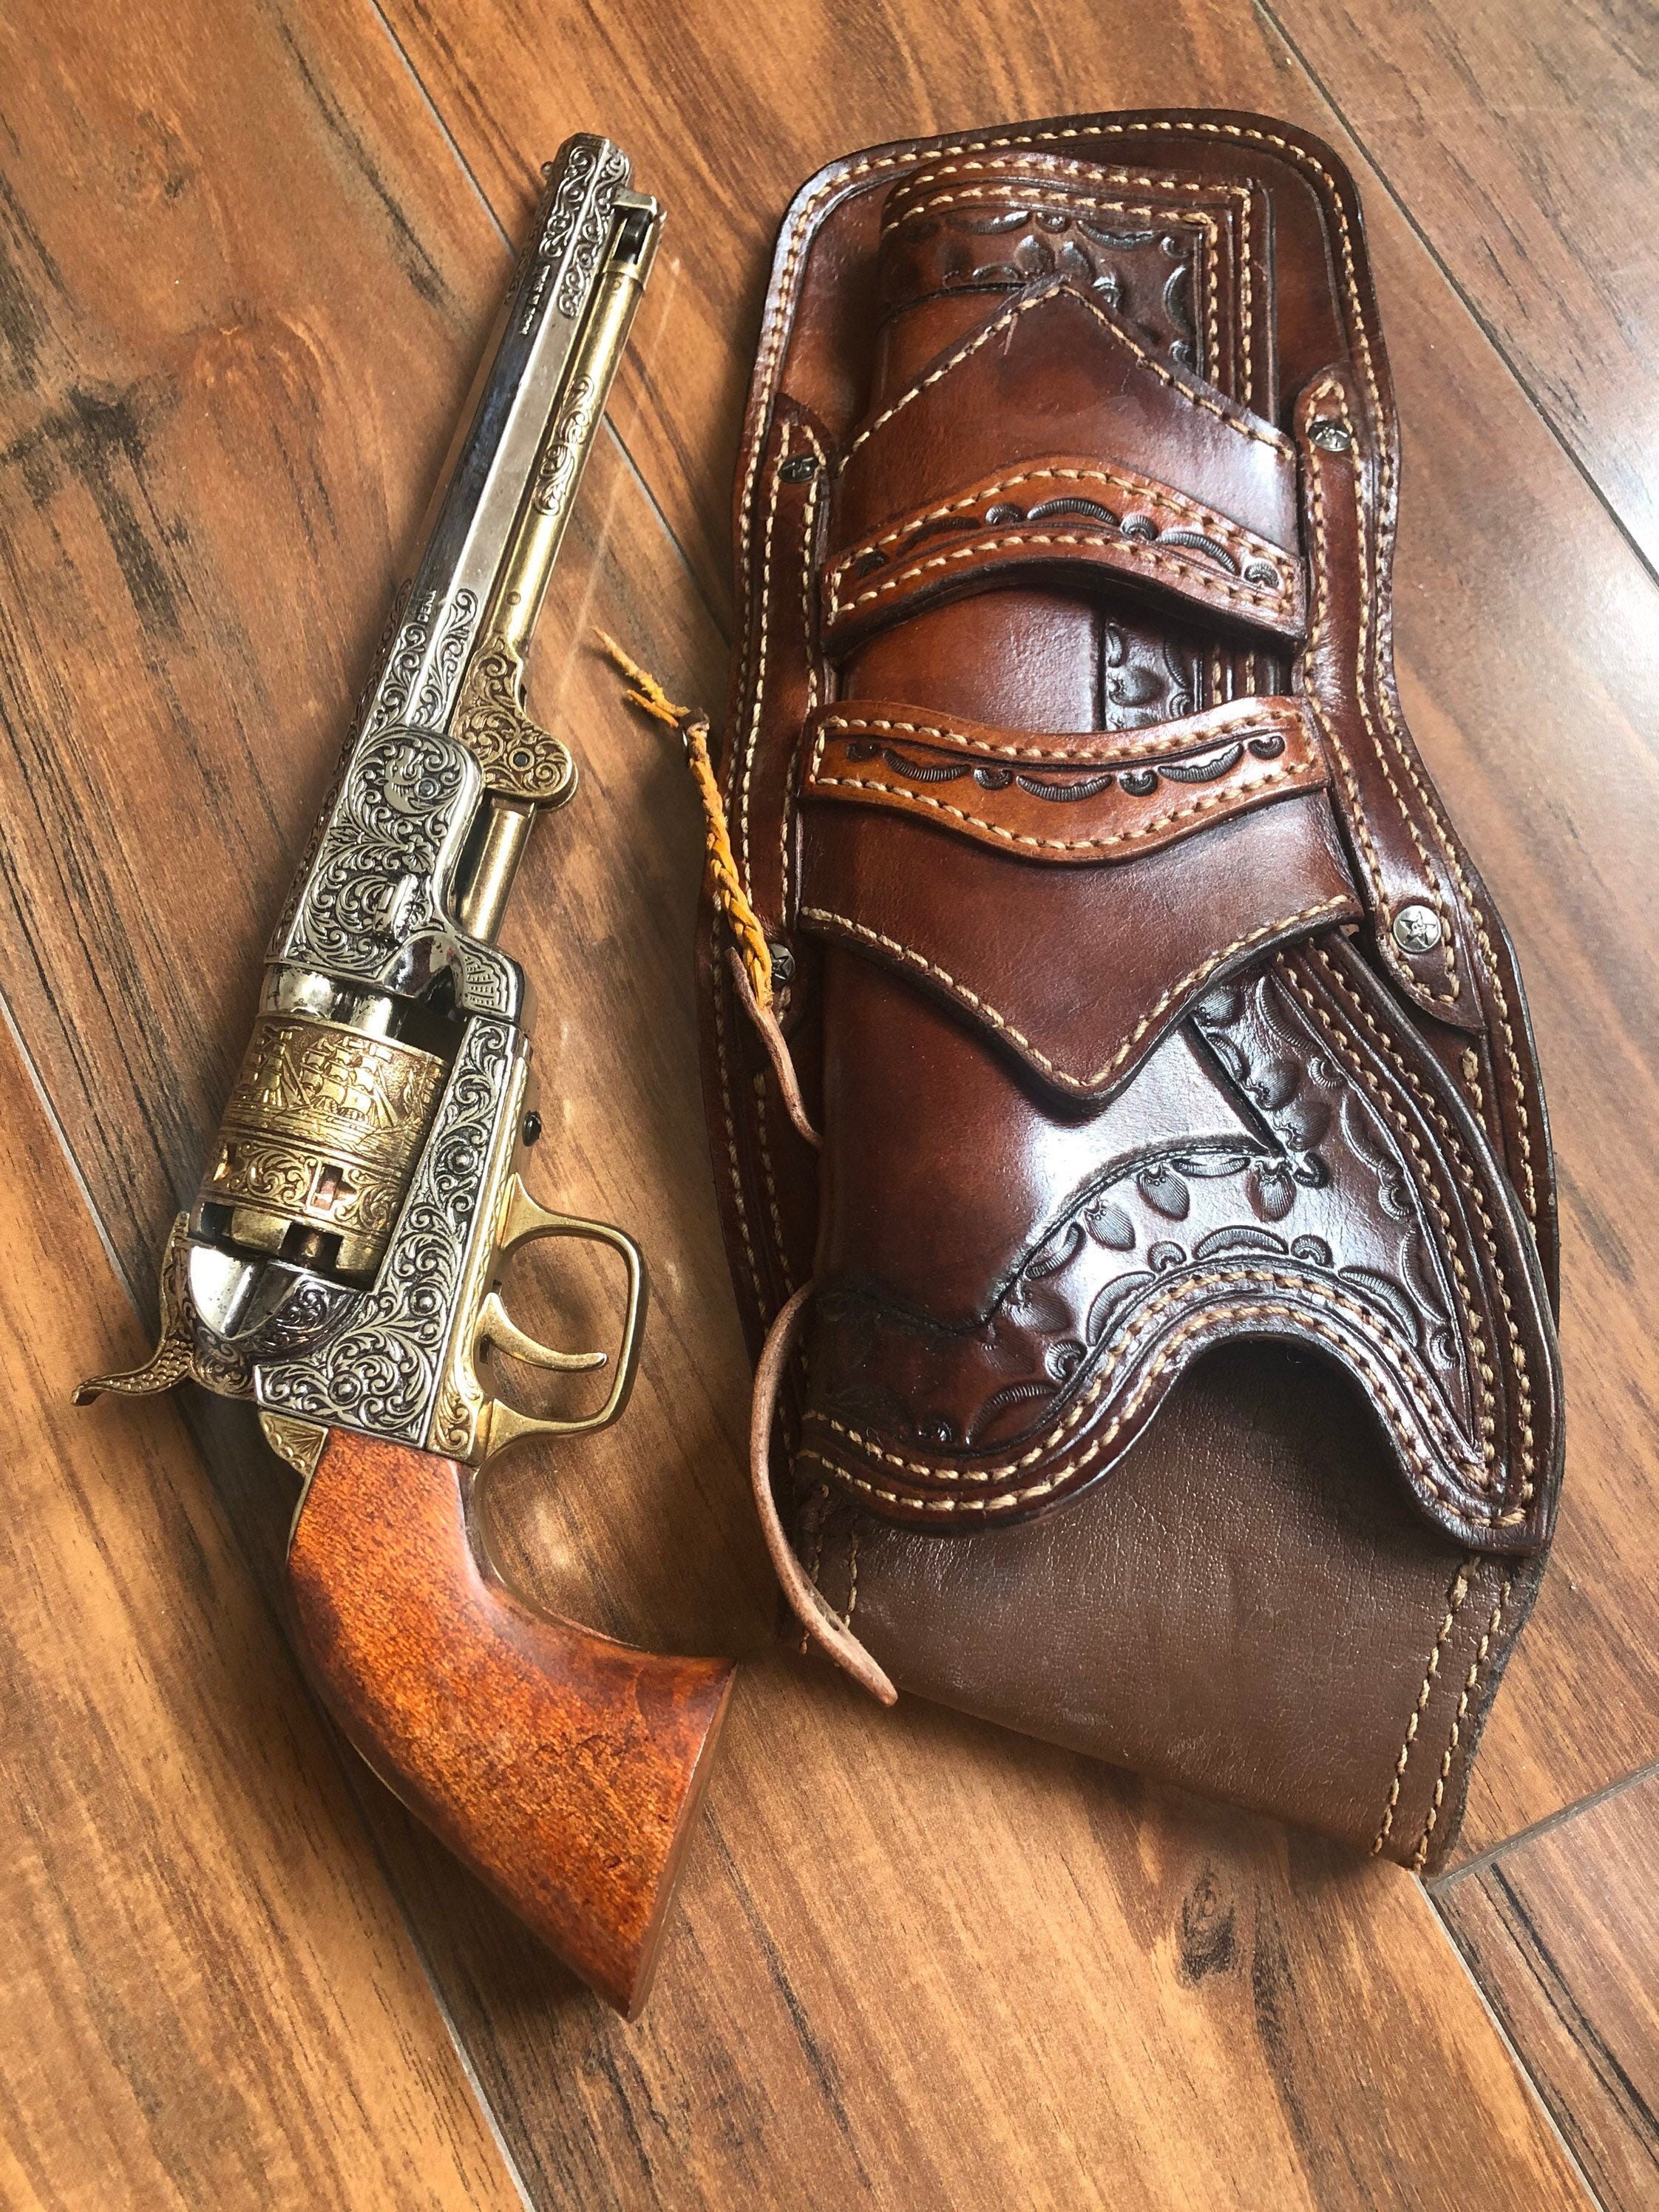 patron-d-tui-revolver-western-7-1-2-au-format-etsy-france